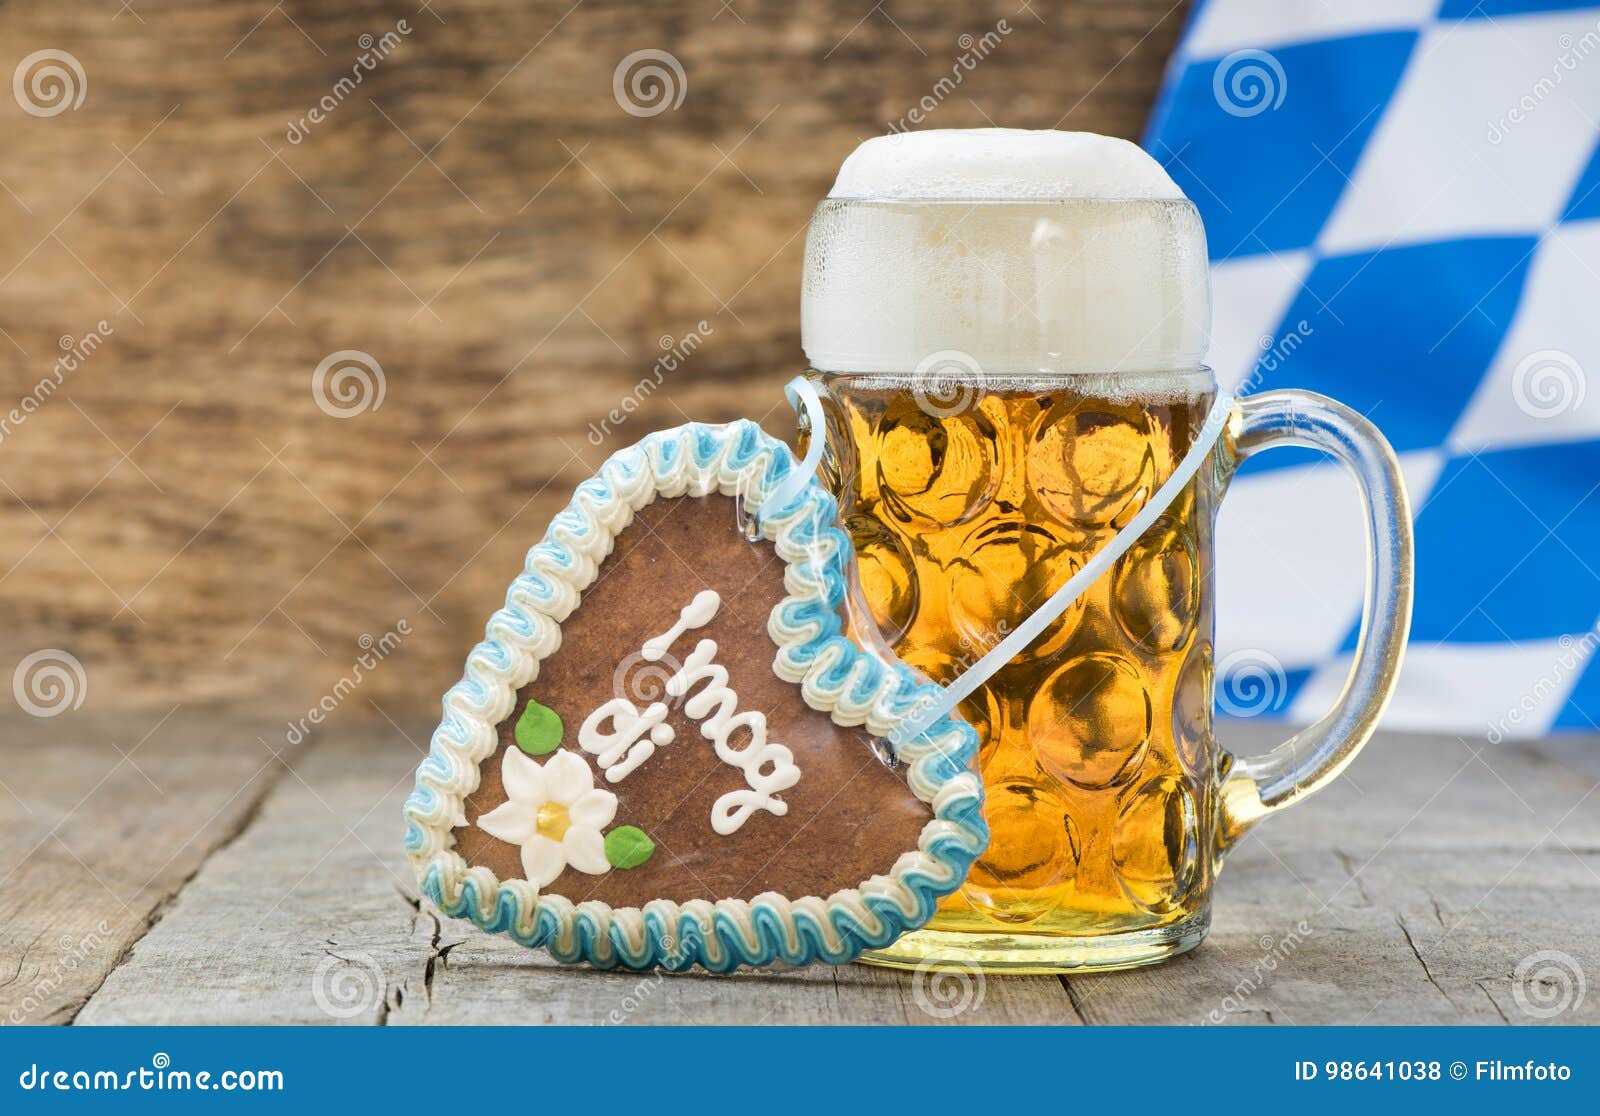 kiespijn zoom Handelsmerk Big Glass of Lager Beer in Bavaria at Oktoberfest in Munich Stock Photo -  Image of germany, folk: 98641038